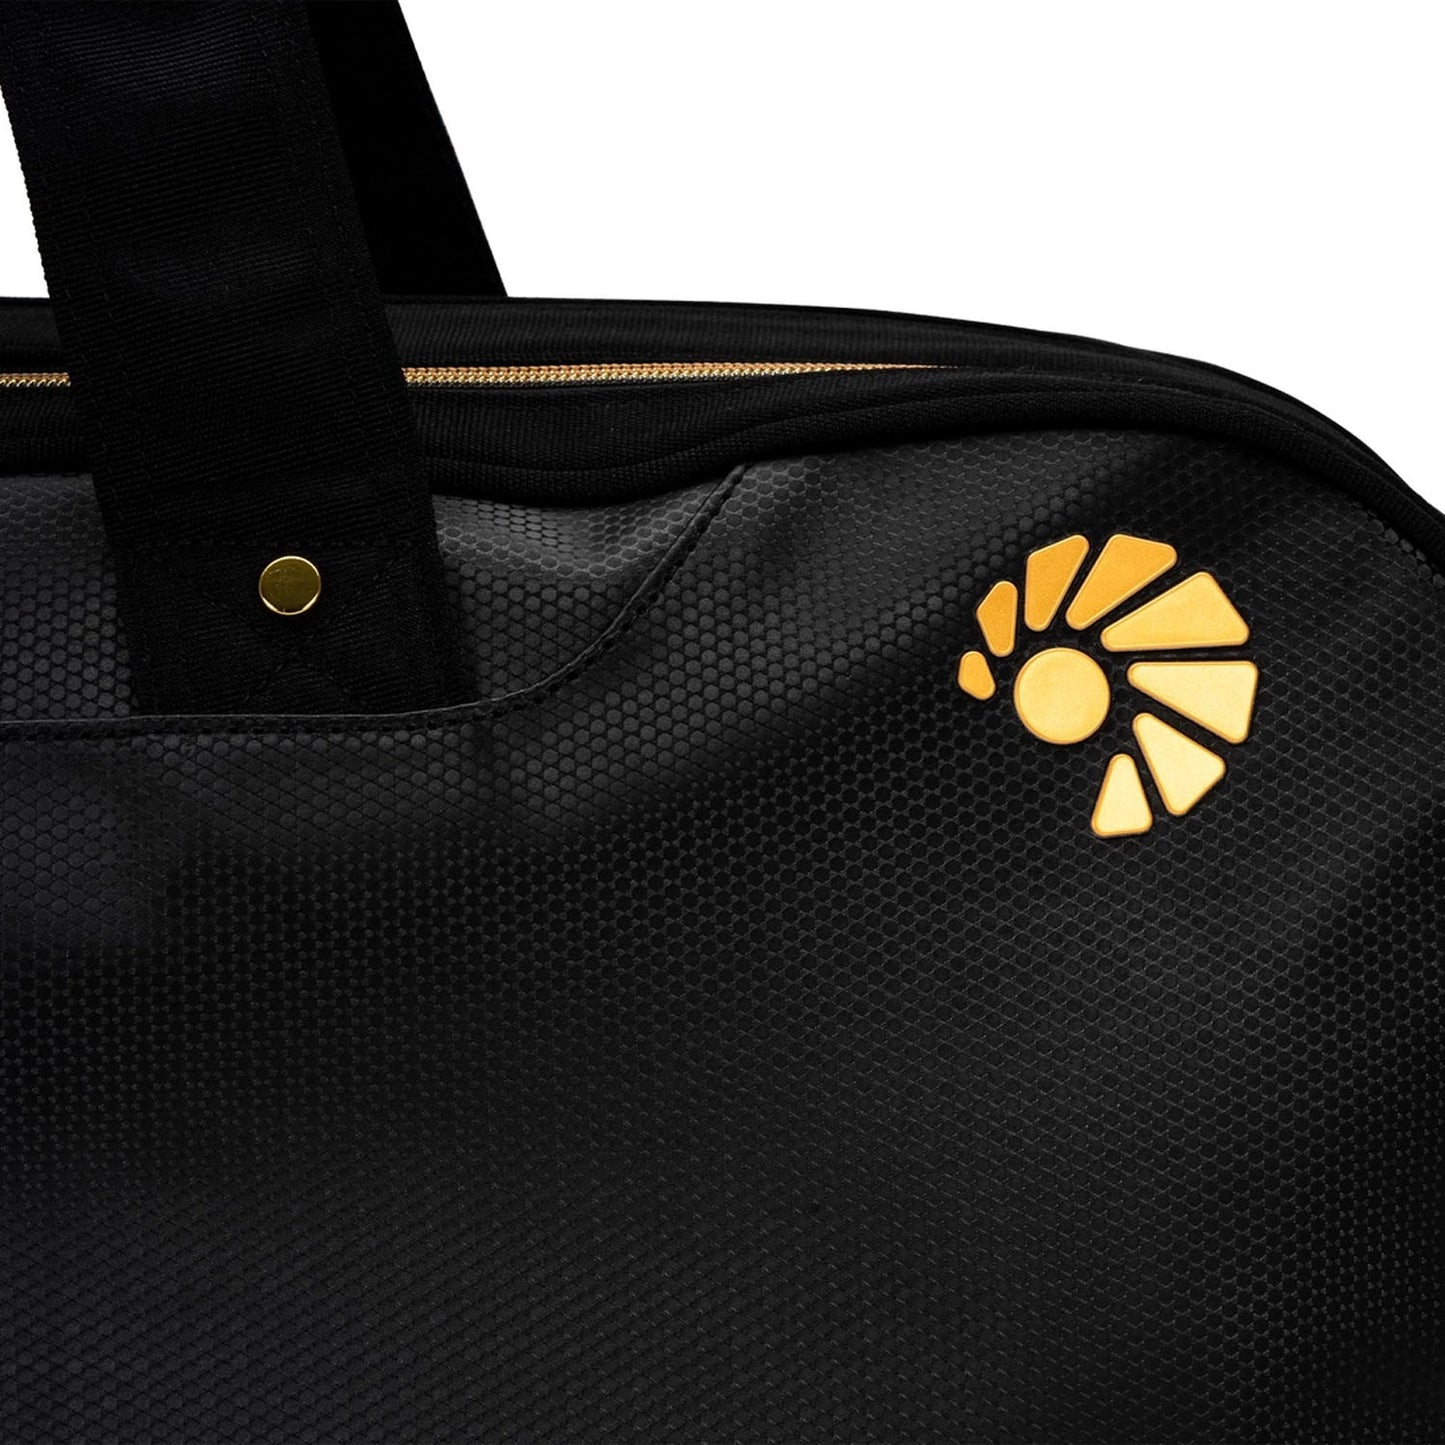 Li-Ning Rectangular Kit Bag - Best Price online Prokicksports.com